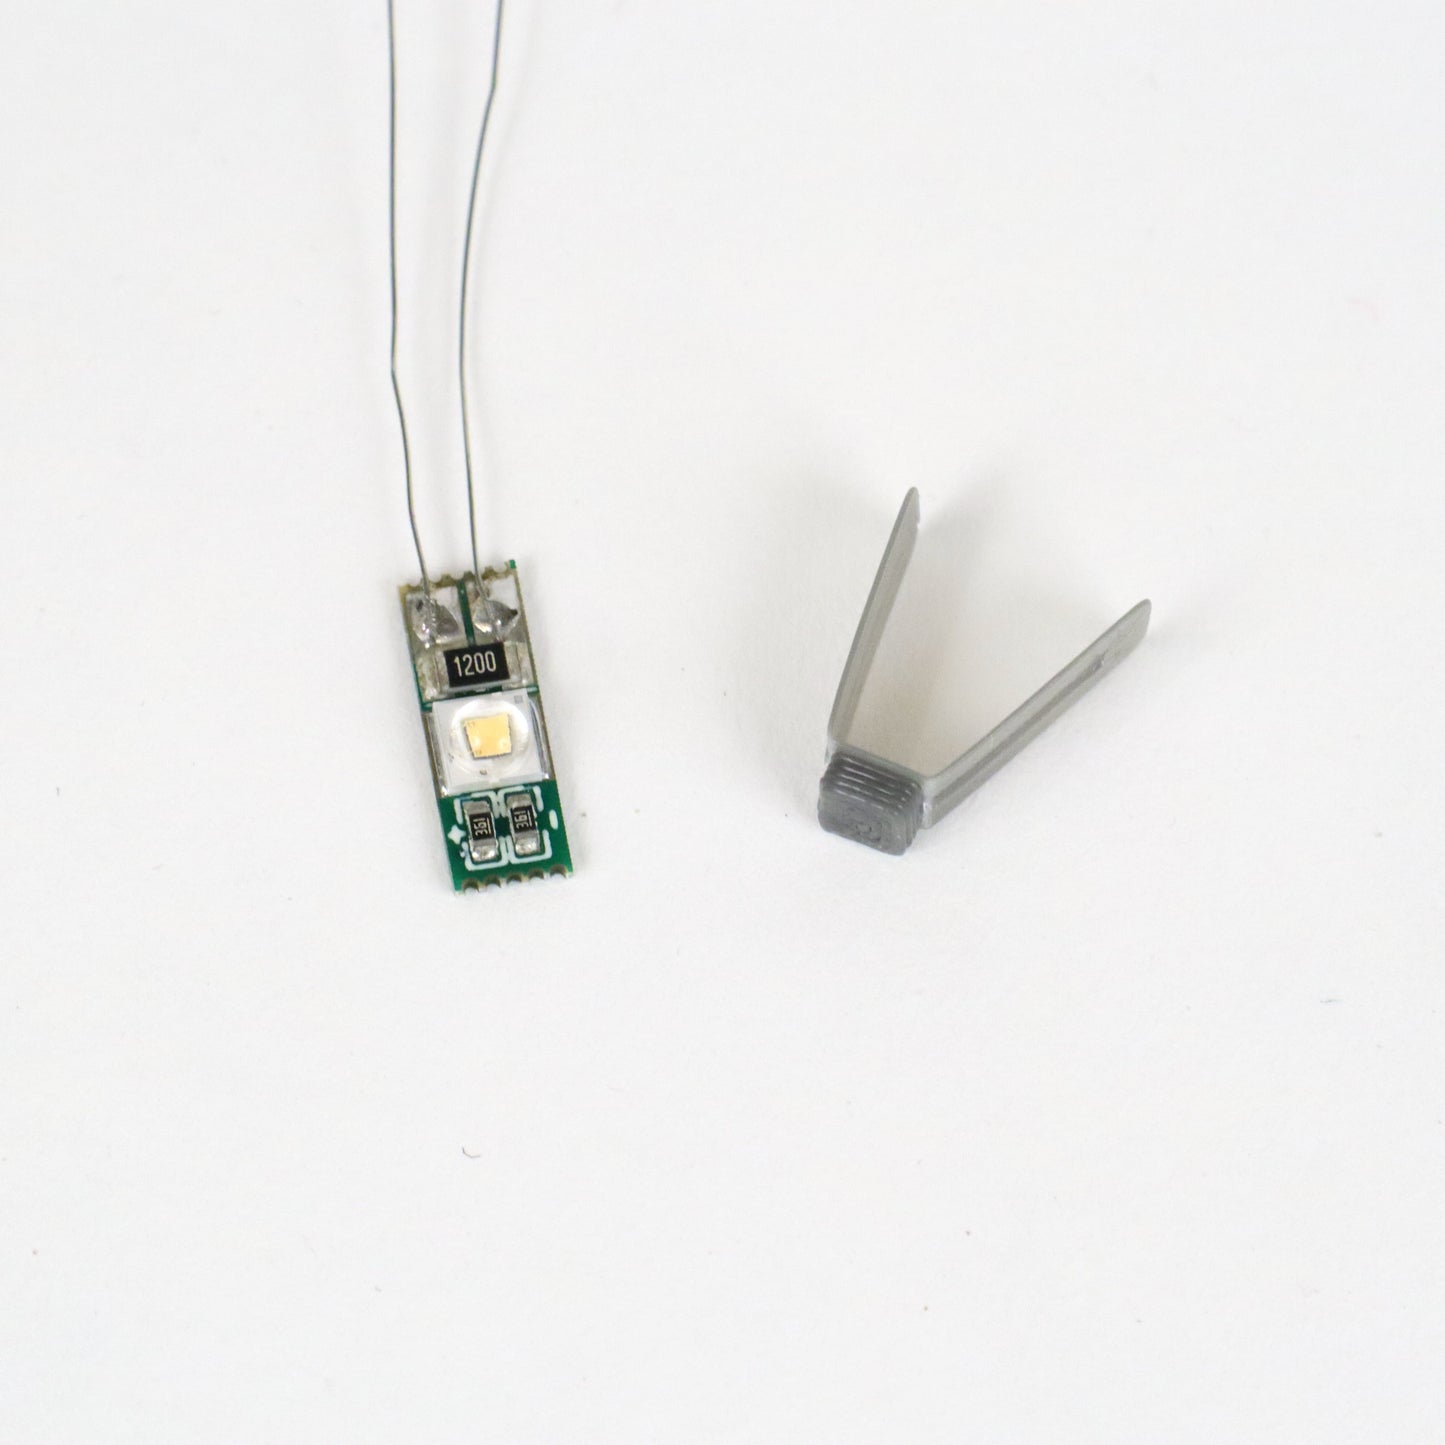 Sensor Arm LED Light Source (Beogram 4002, 4004 and 4000)